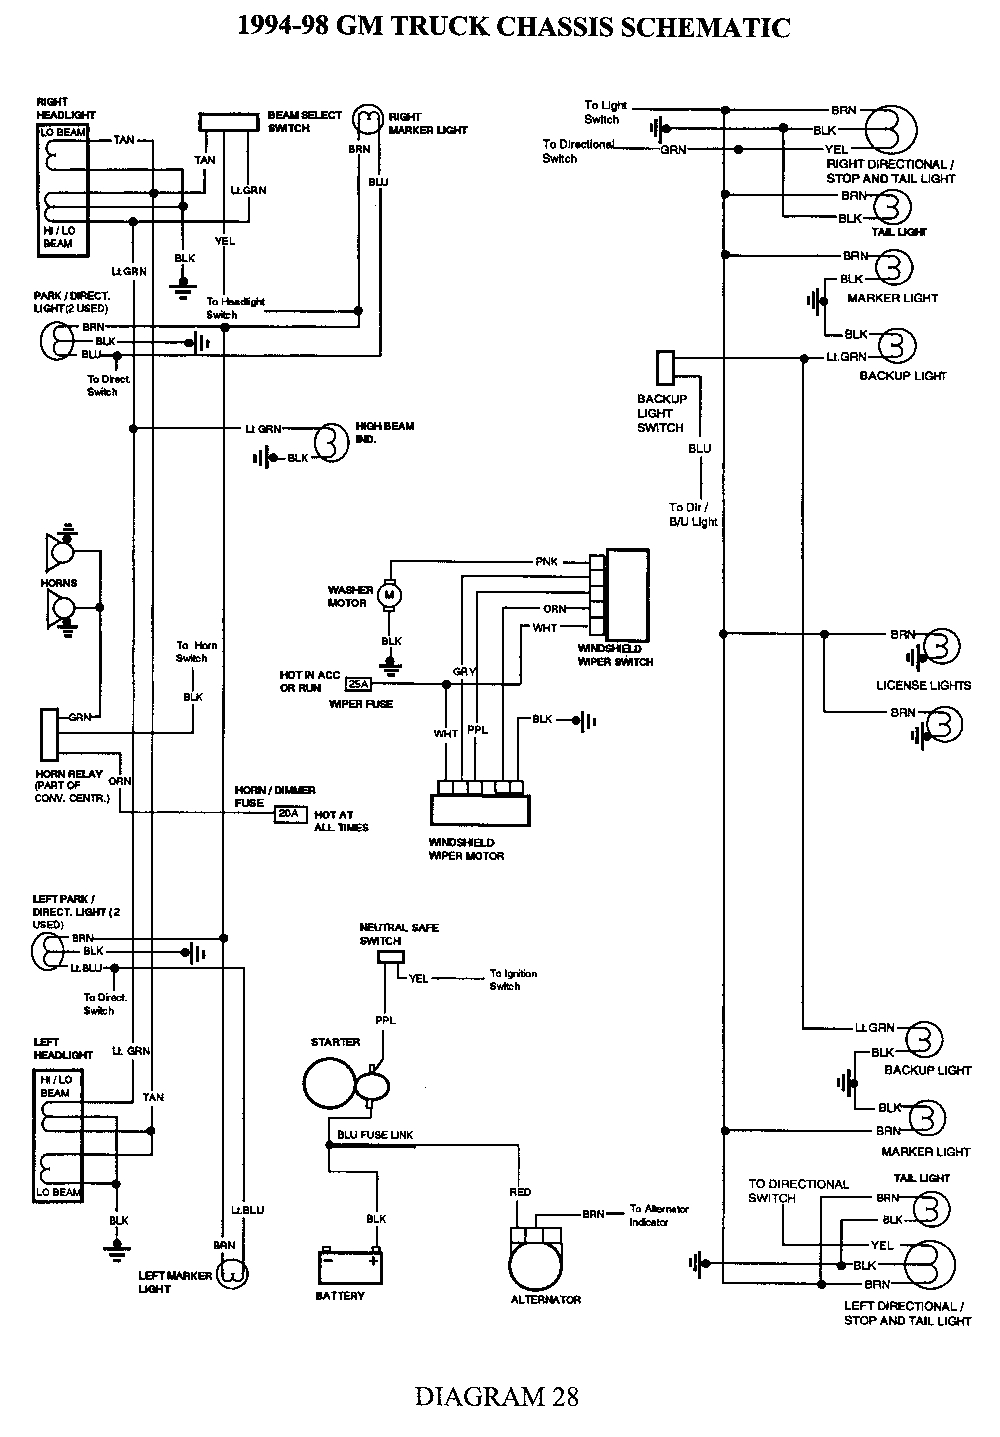 repair guides wiring diagrams wiring diagrams autozone com wiring diagram for 1998 chevy silverado wiring diagram for 1998 chevy silverado